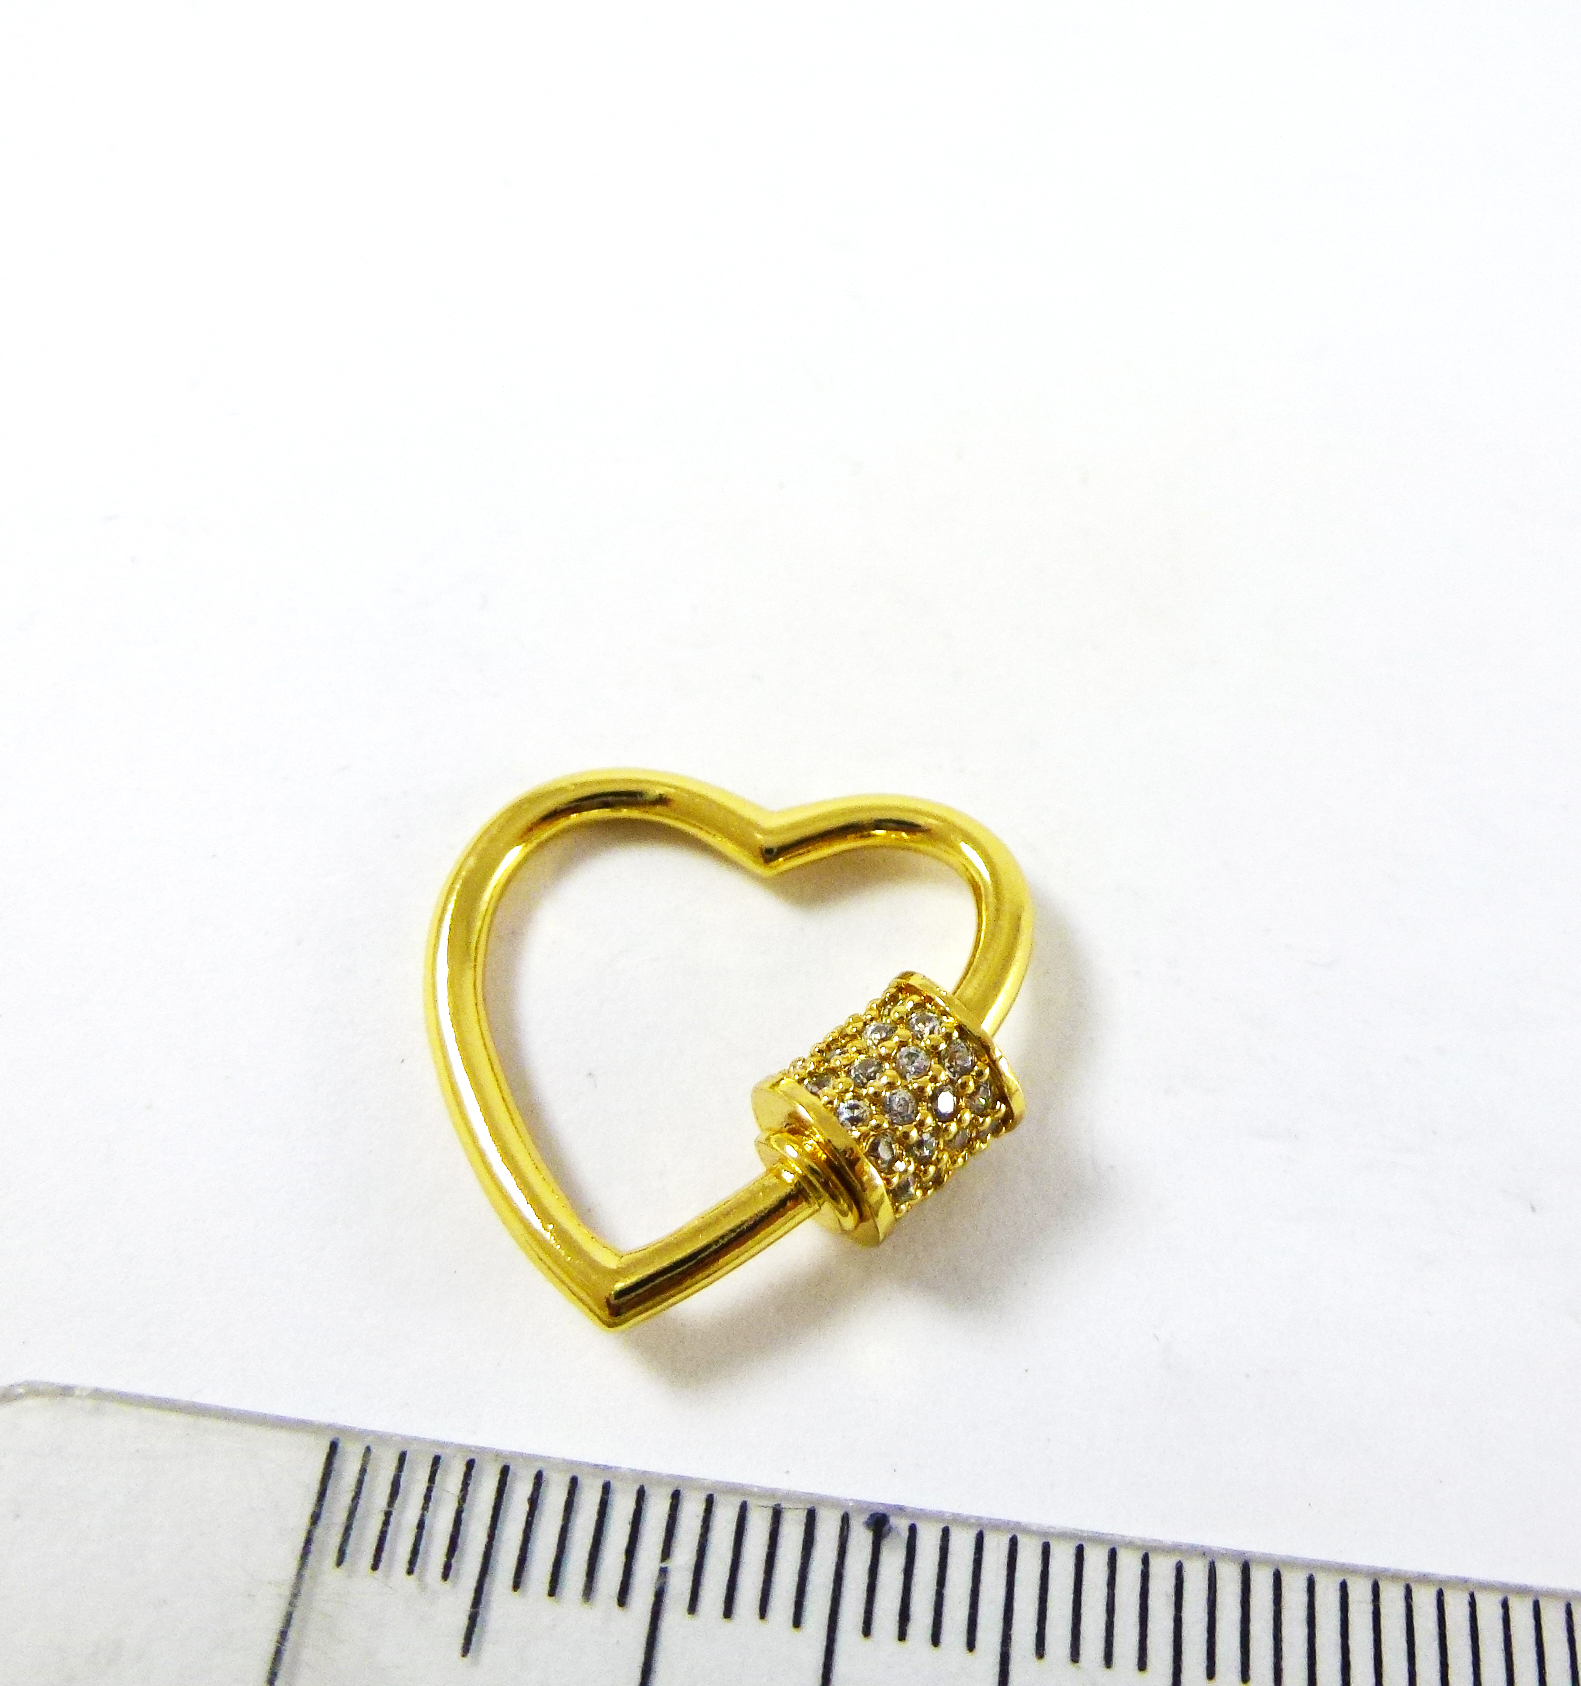 20mm銅鍍金色螺旋鑲鑽心形扣